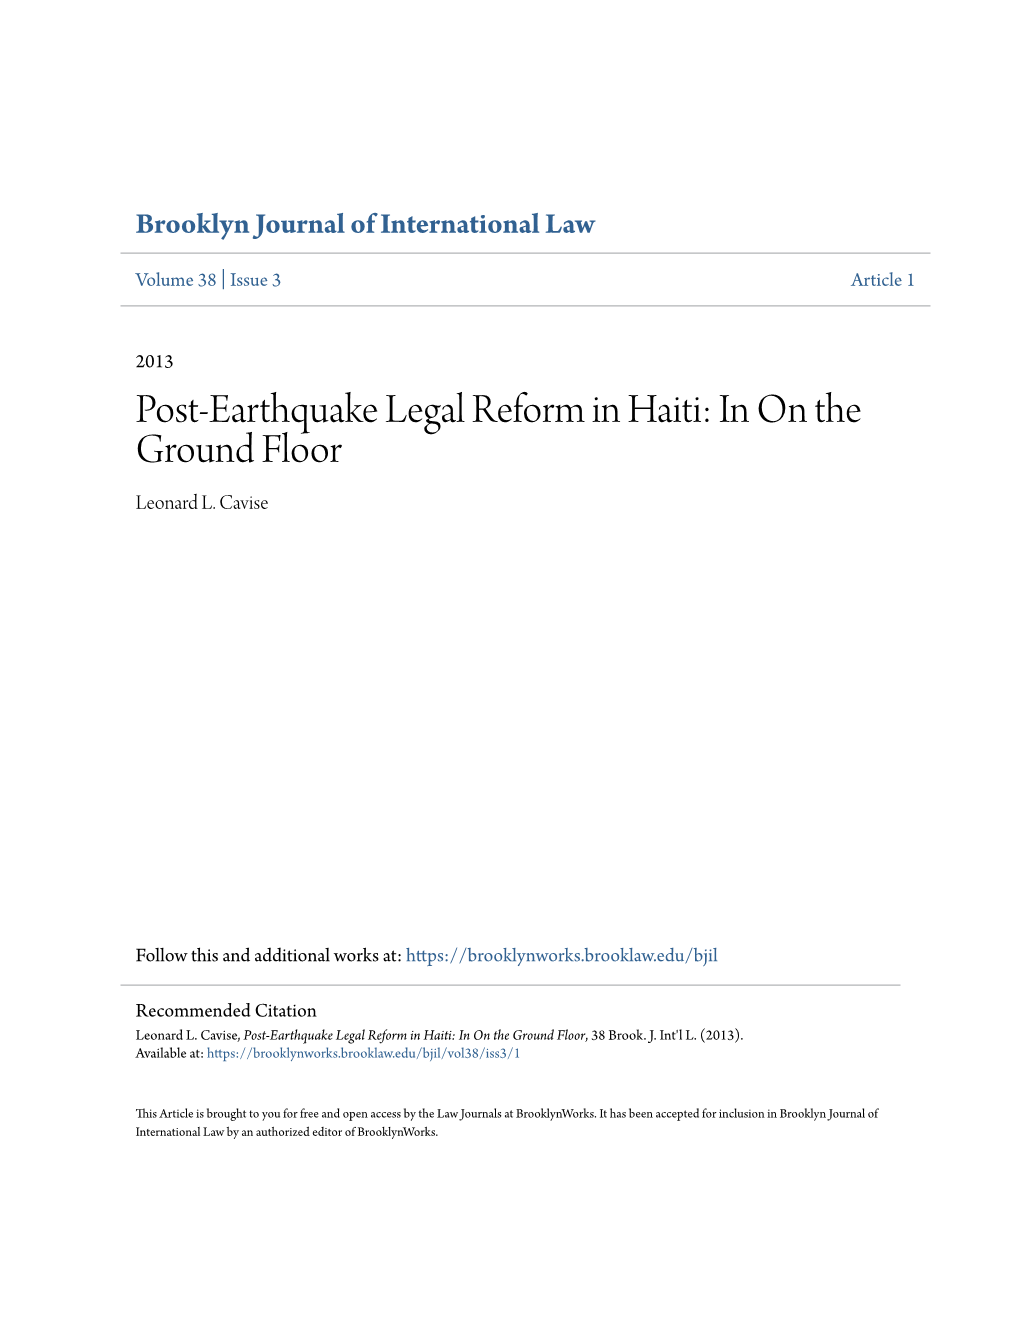 Post-Earthquake Legal Reform in Haiti: in on the Ground Floor Leonard L